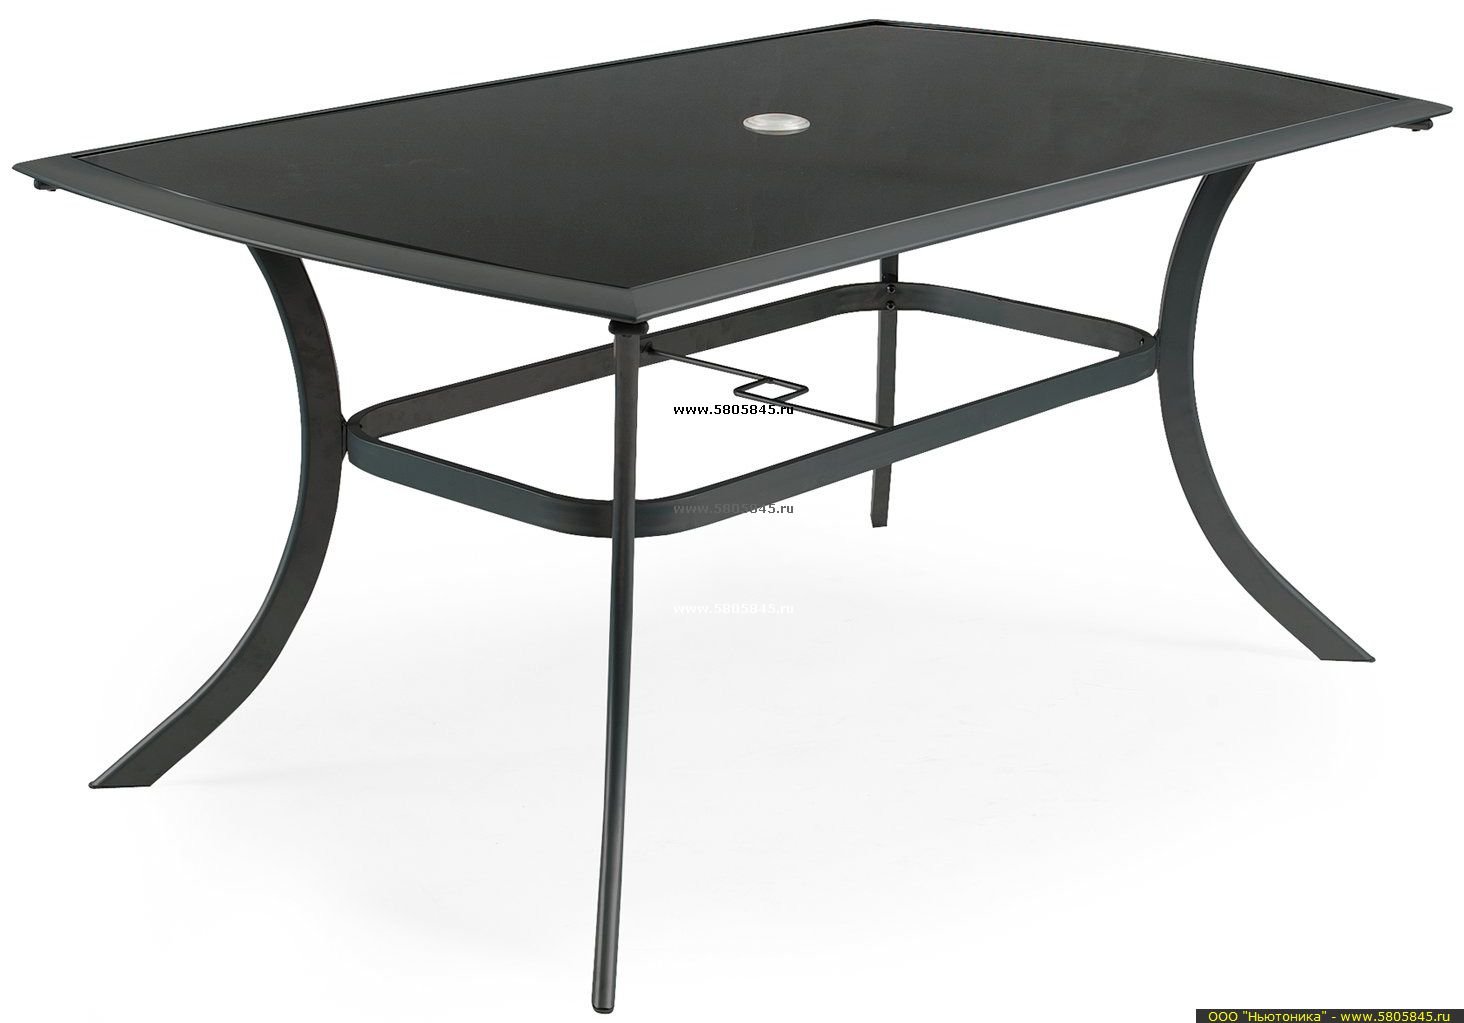 Столик металлический каркас. Стол для дачи Tarrington House Black 150x90x70 см. Лаго стол. С1212 стол для сада Андреа стекло/металл. Кофейный стол Лаго.